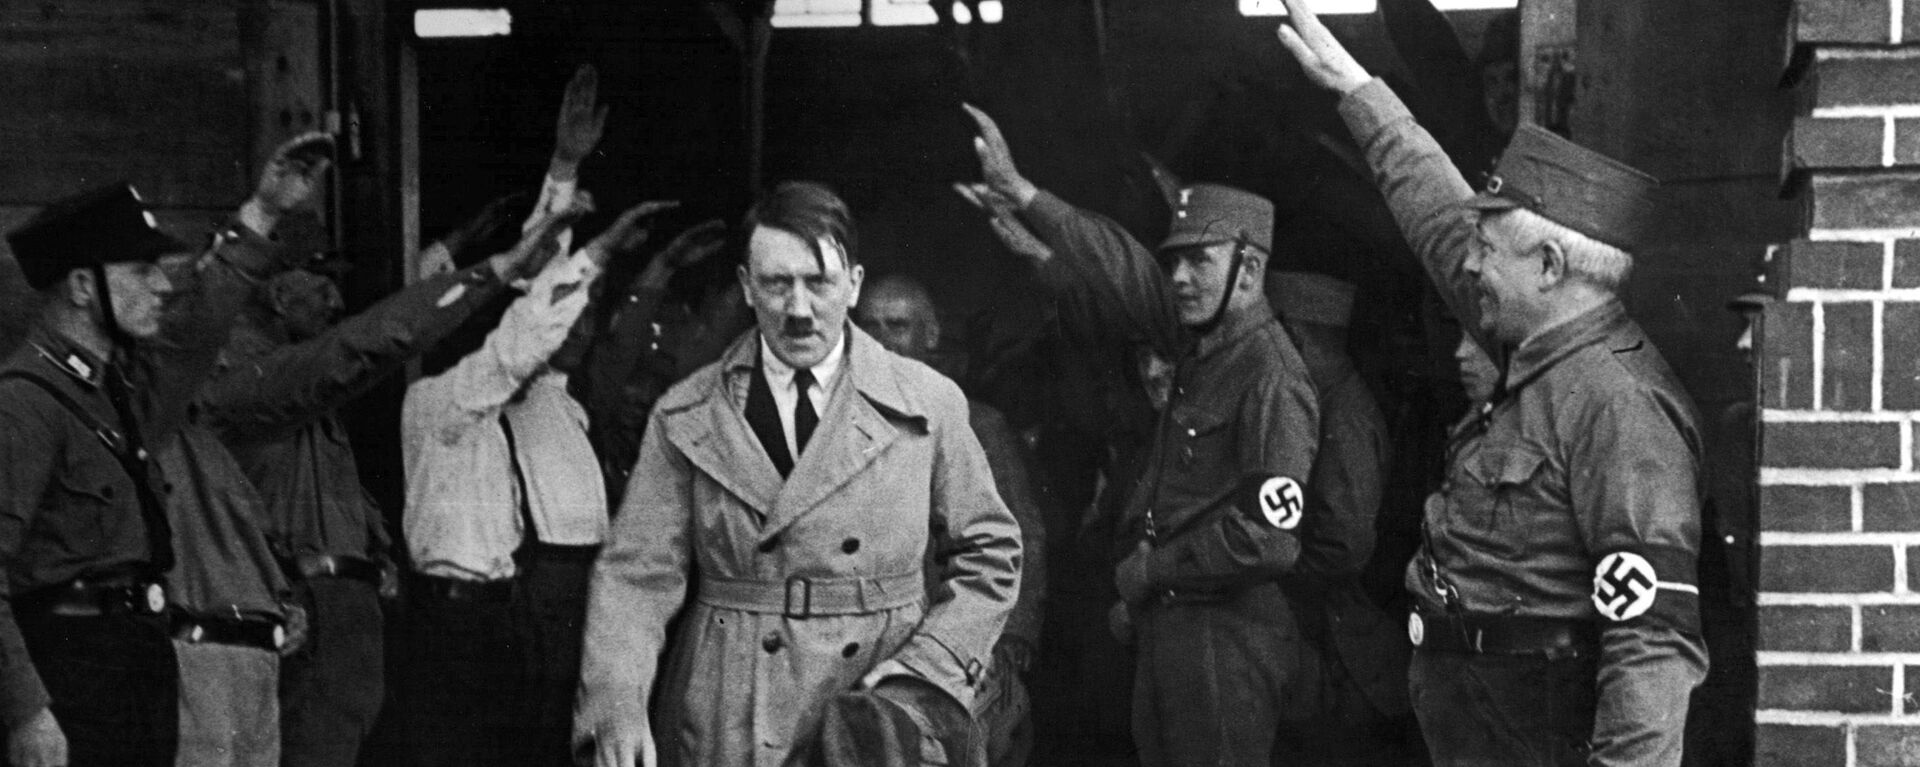 Adolf Hitler, líder de la Alemania nazi (archivo) - Sputnik Mundo, 1920, 12.02.2021